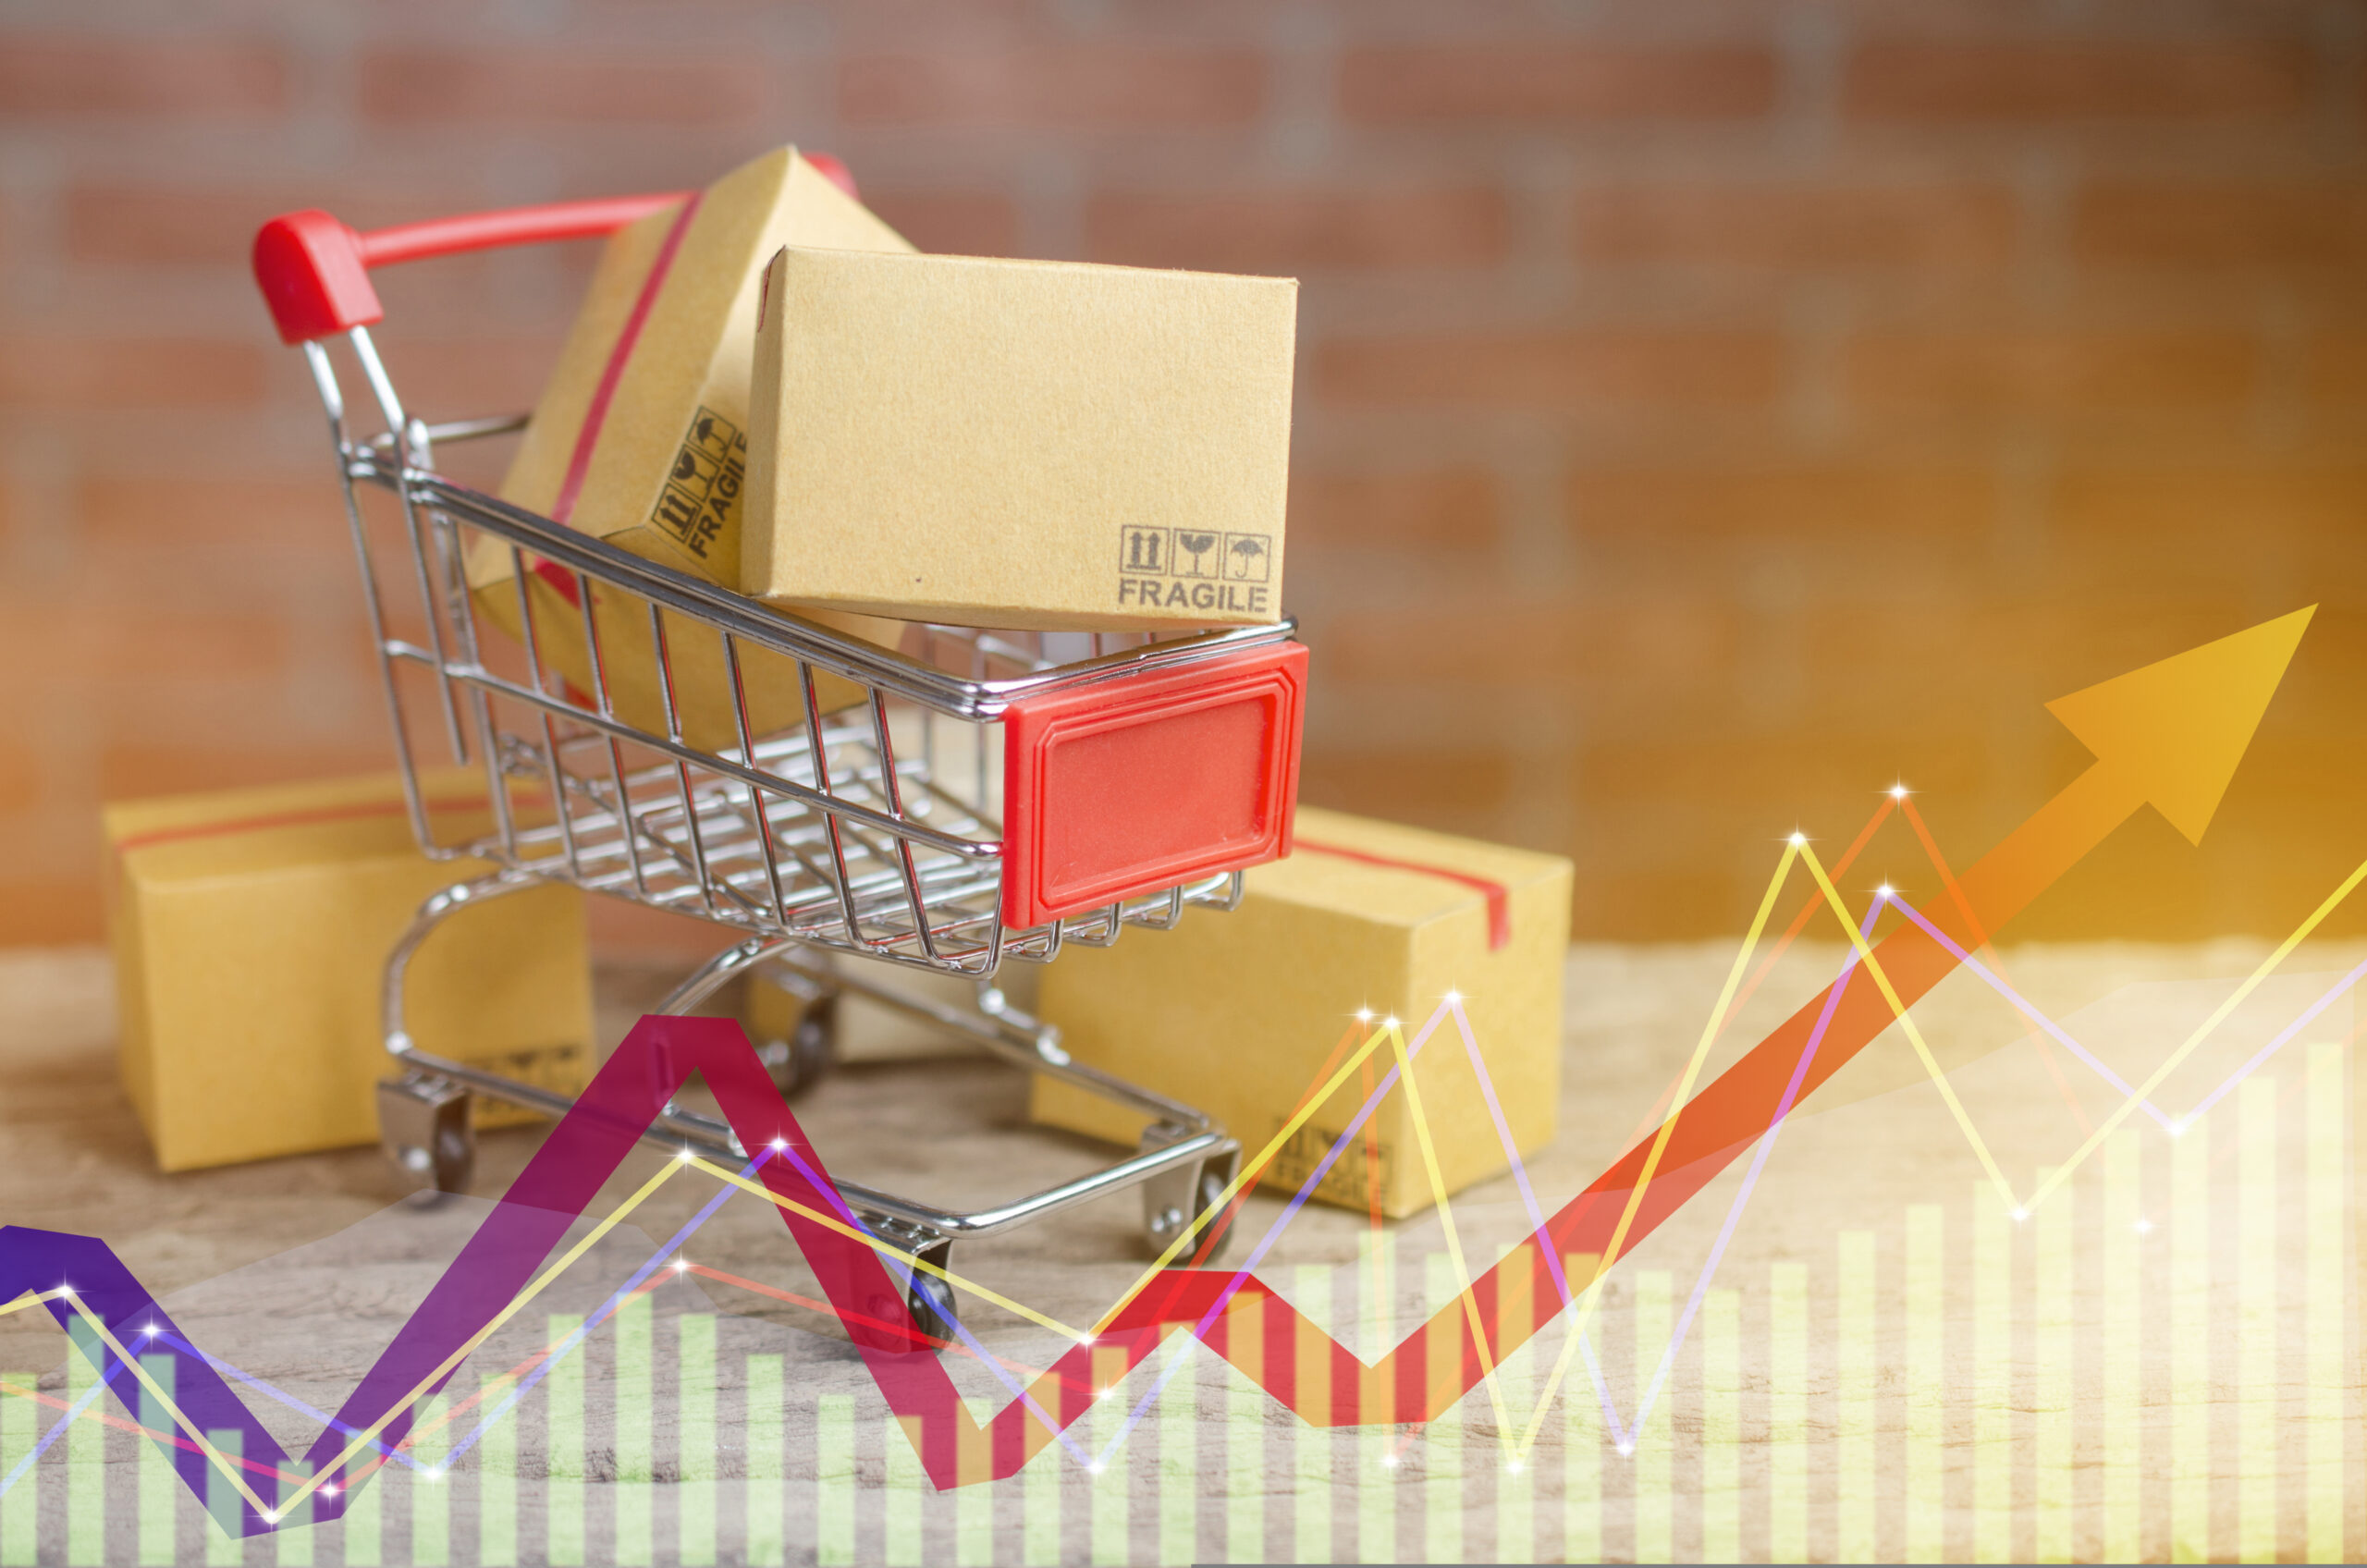 Increasing sales of consumer packaged goods